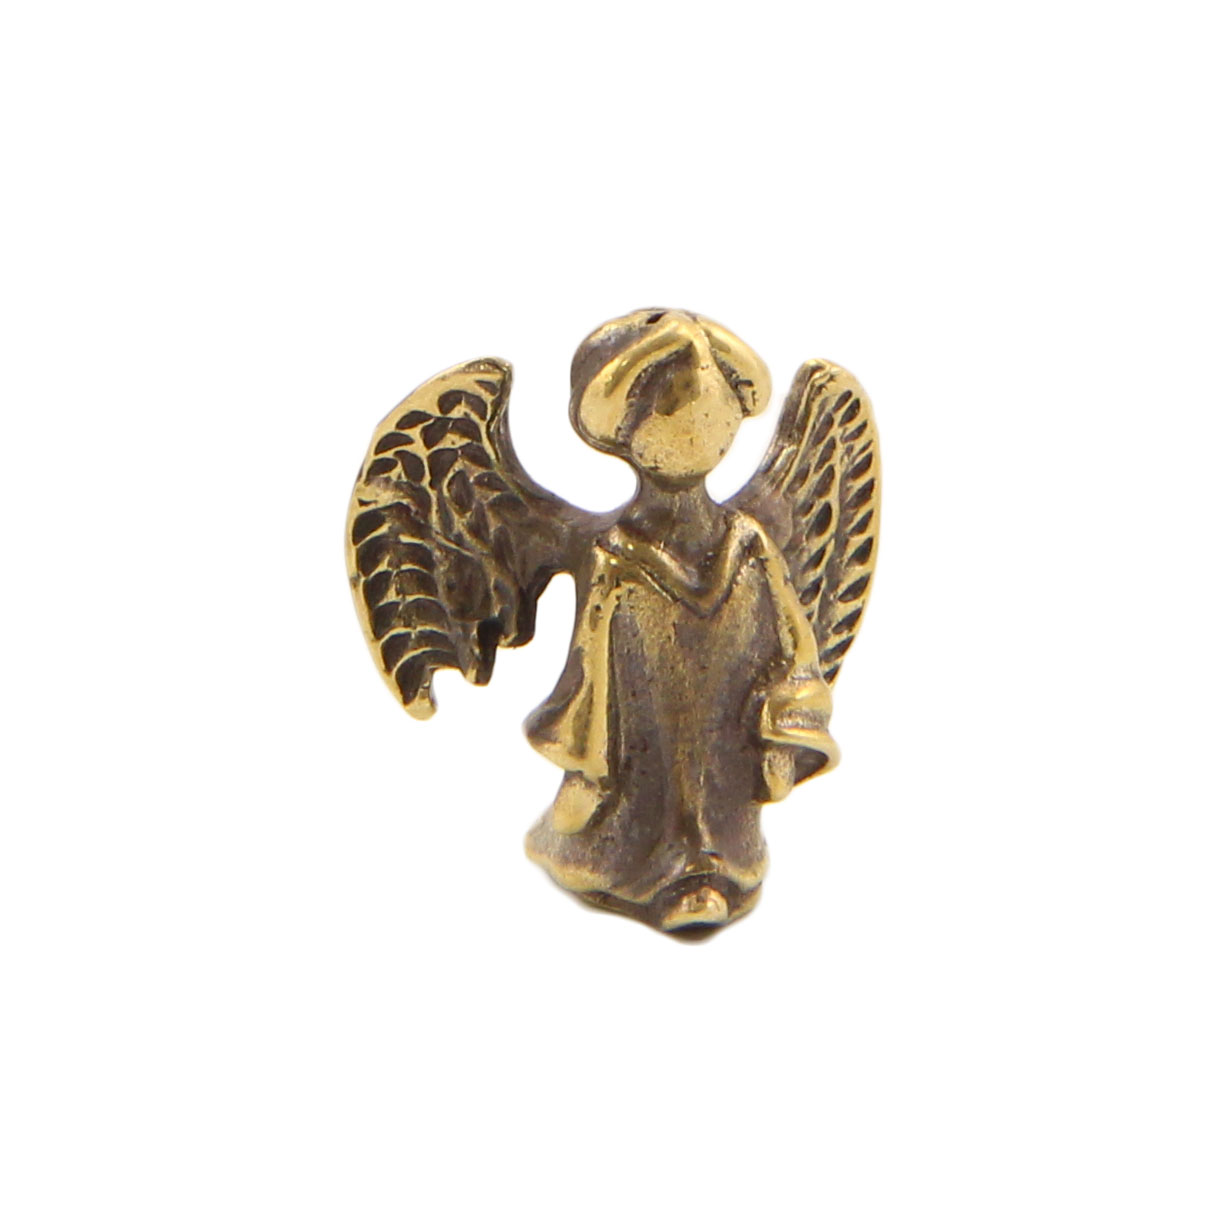 Бронзовый сувенир Ангел безликий малыйФото 15455-05.jpg